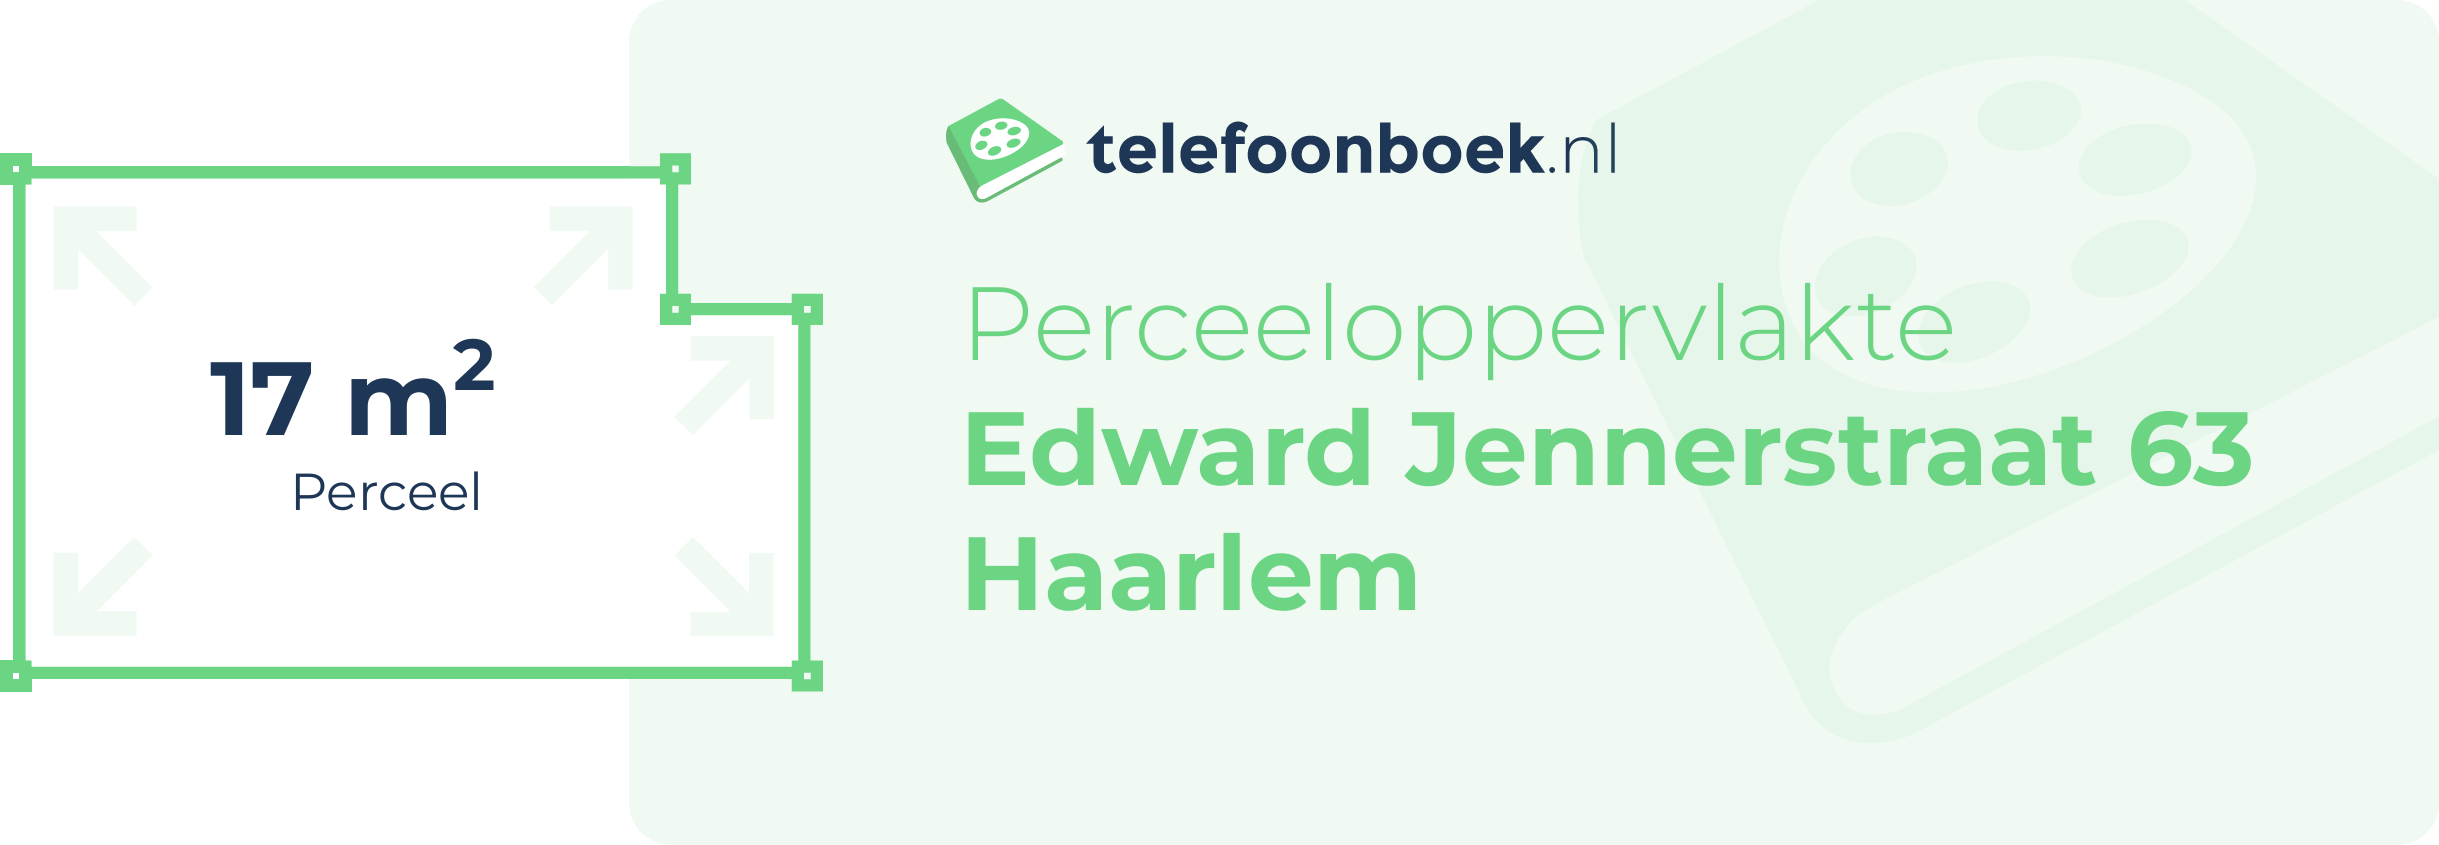 Perceeloppervlakte Edward Jennerstraat 63 Haarlem